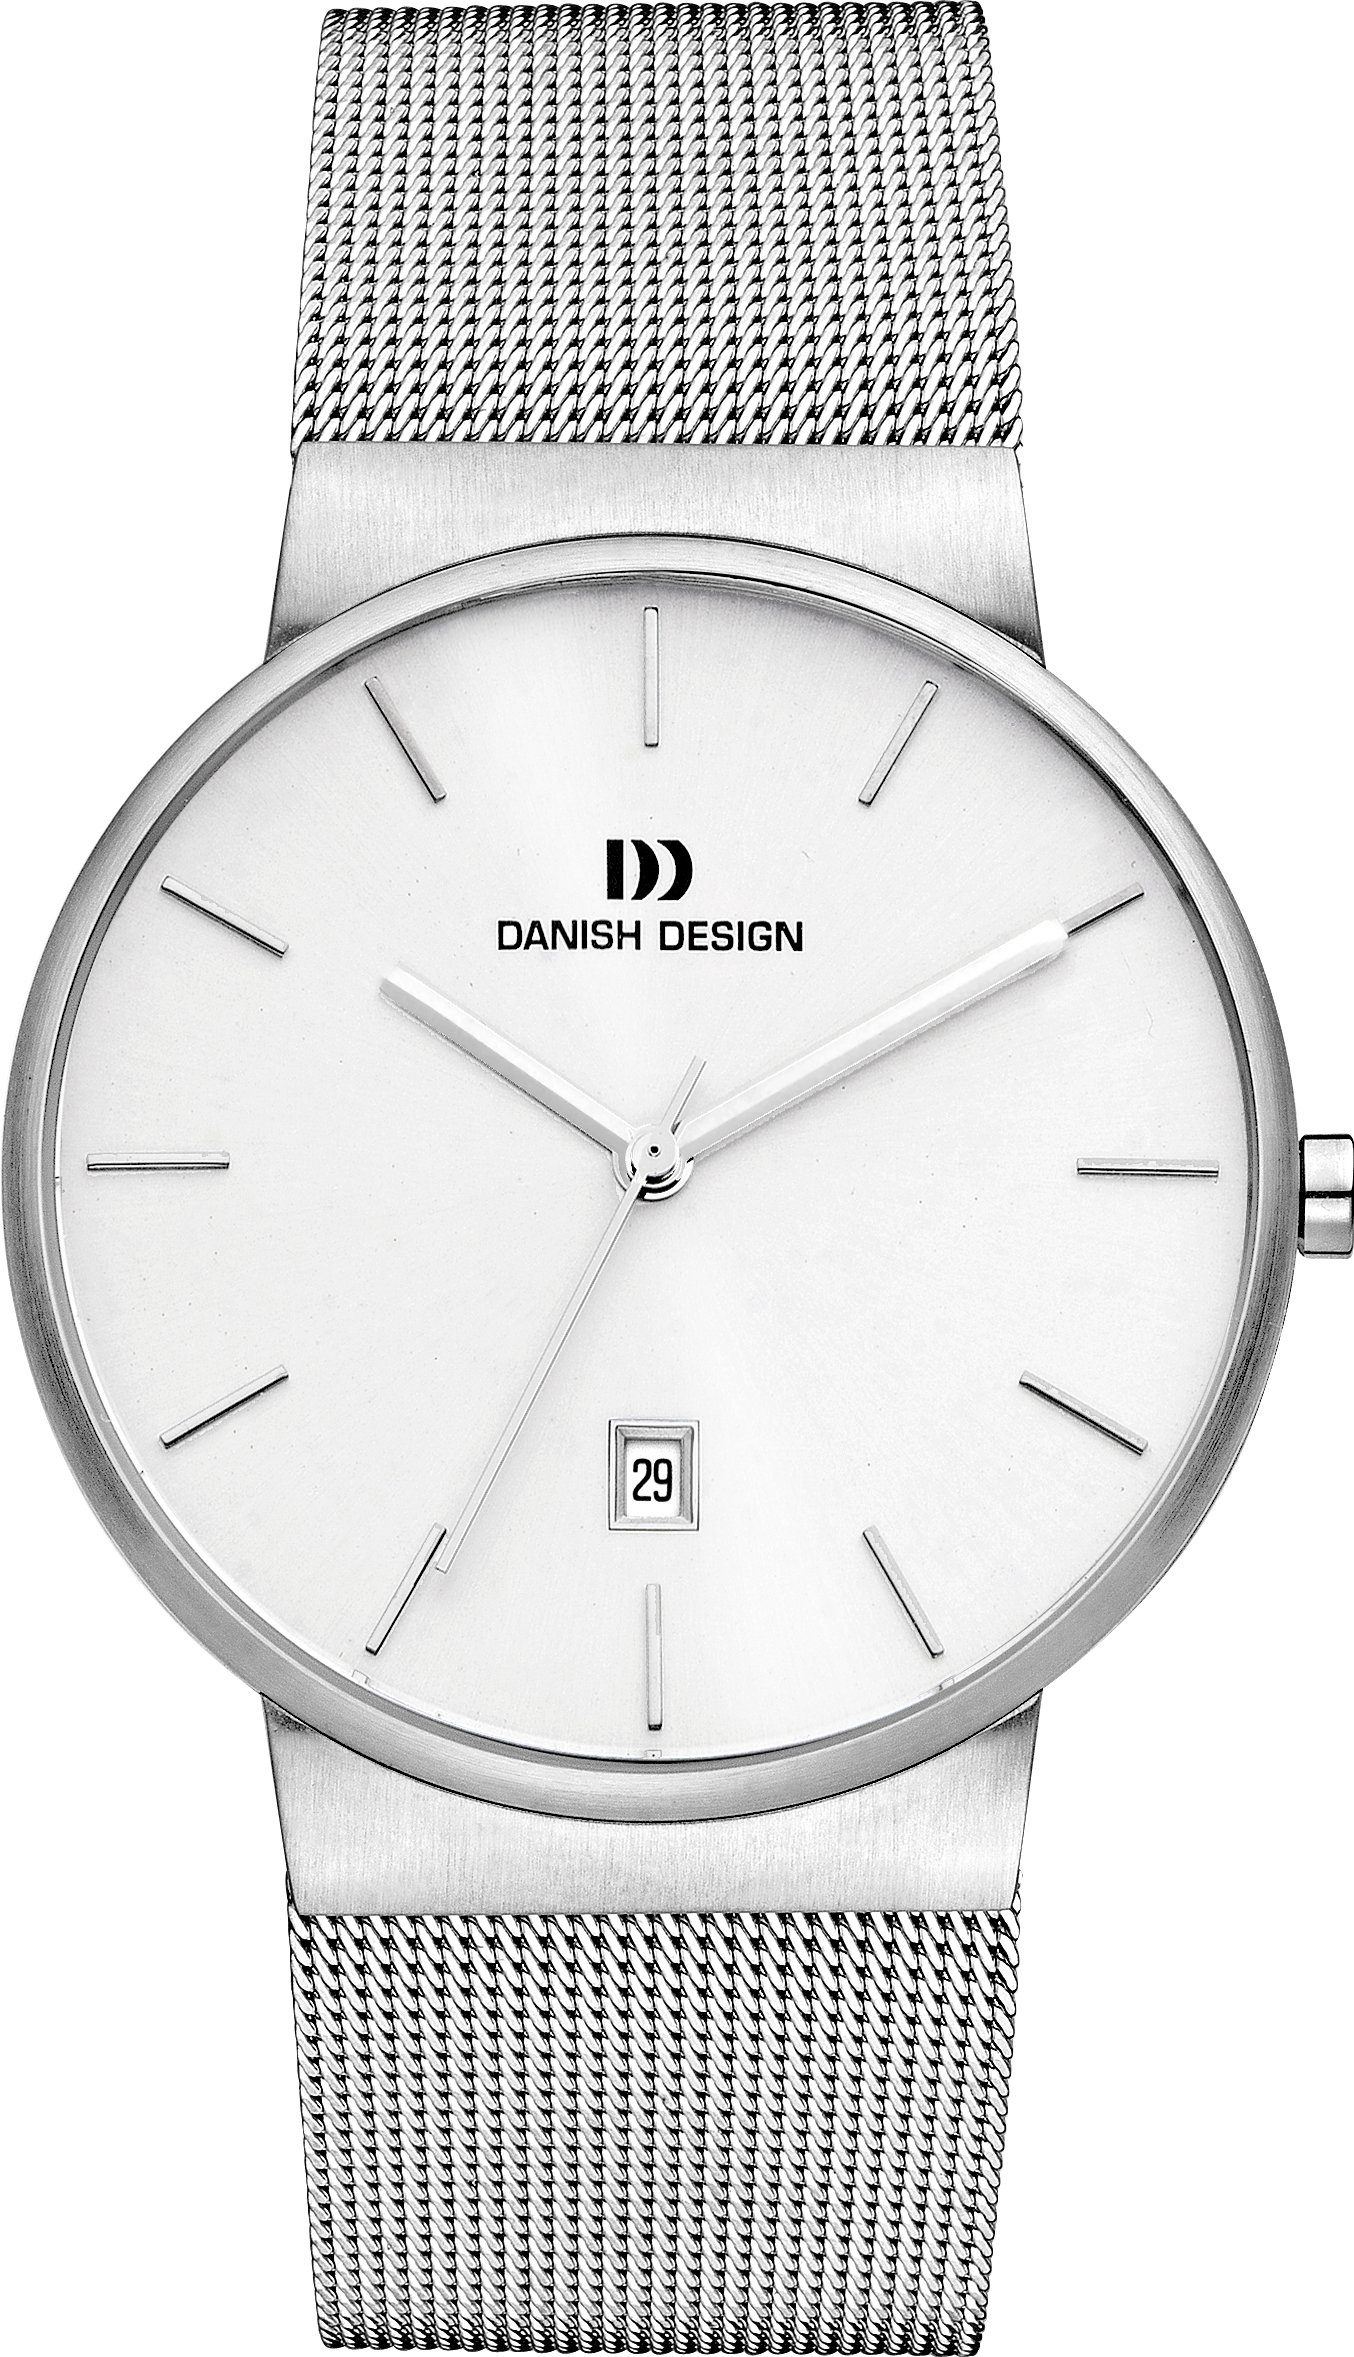 Quarzuhr Uhr Datum Design Designuhr Danish 40mm, Herren Datum Silber bei 6 mit TAGE